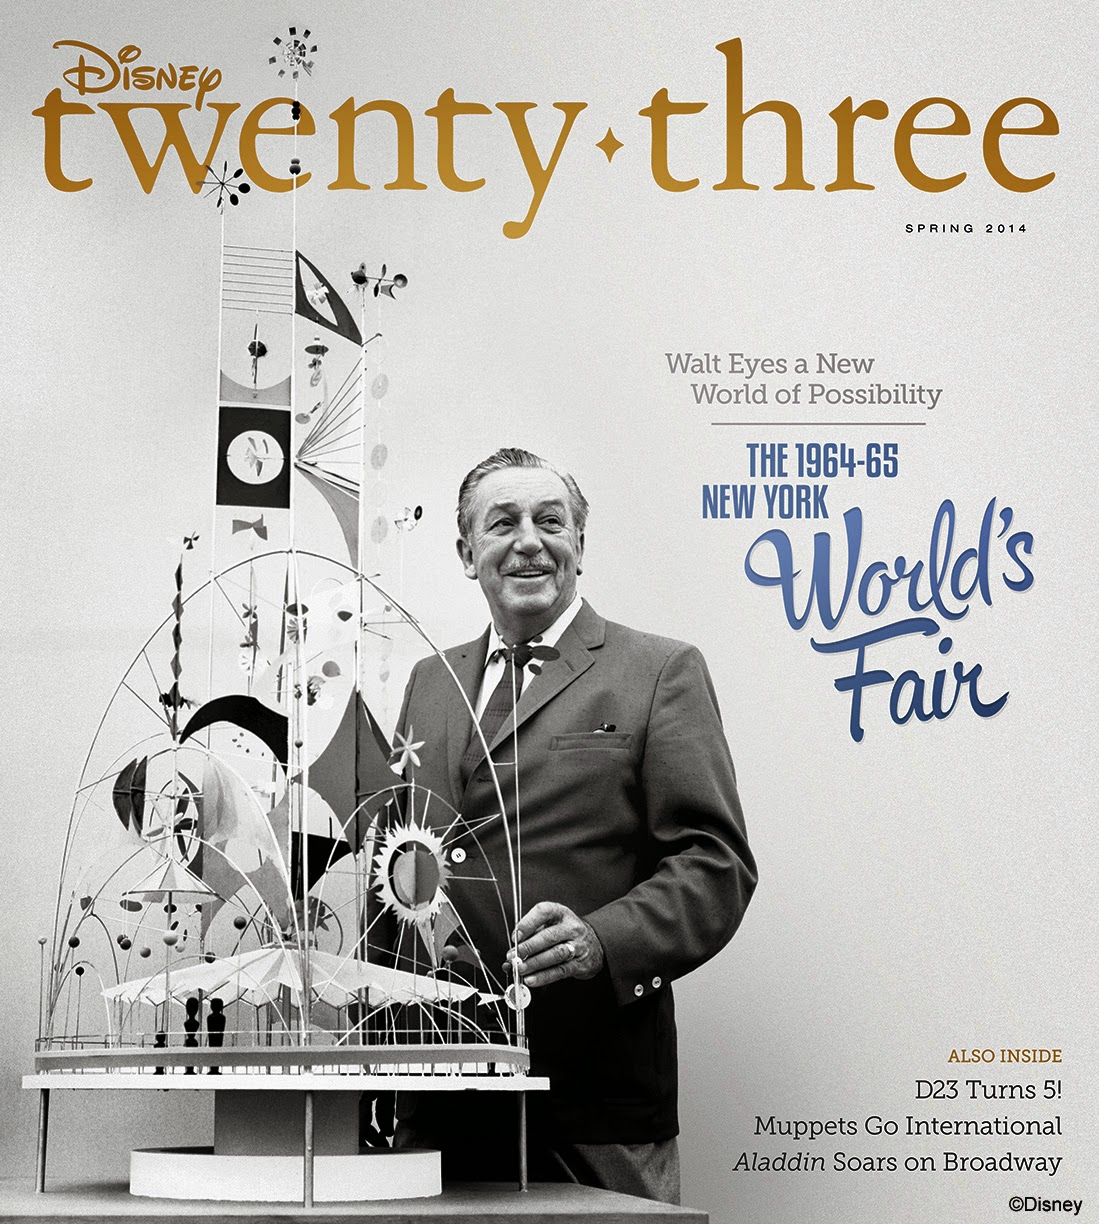 Disney twenty-three Spring Issue Celebrates Disney's Contributions to the 1964–65 New York World's Fair